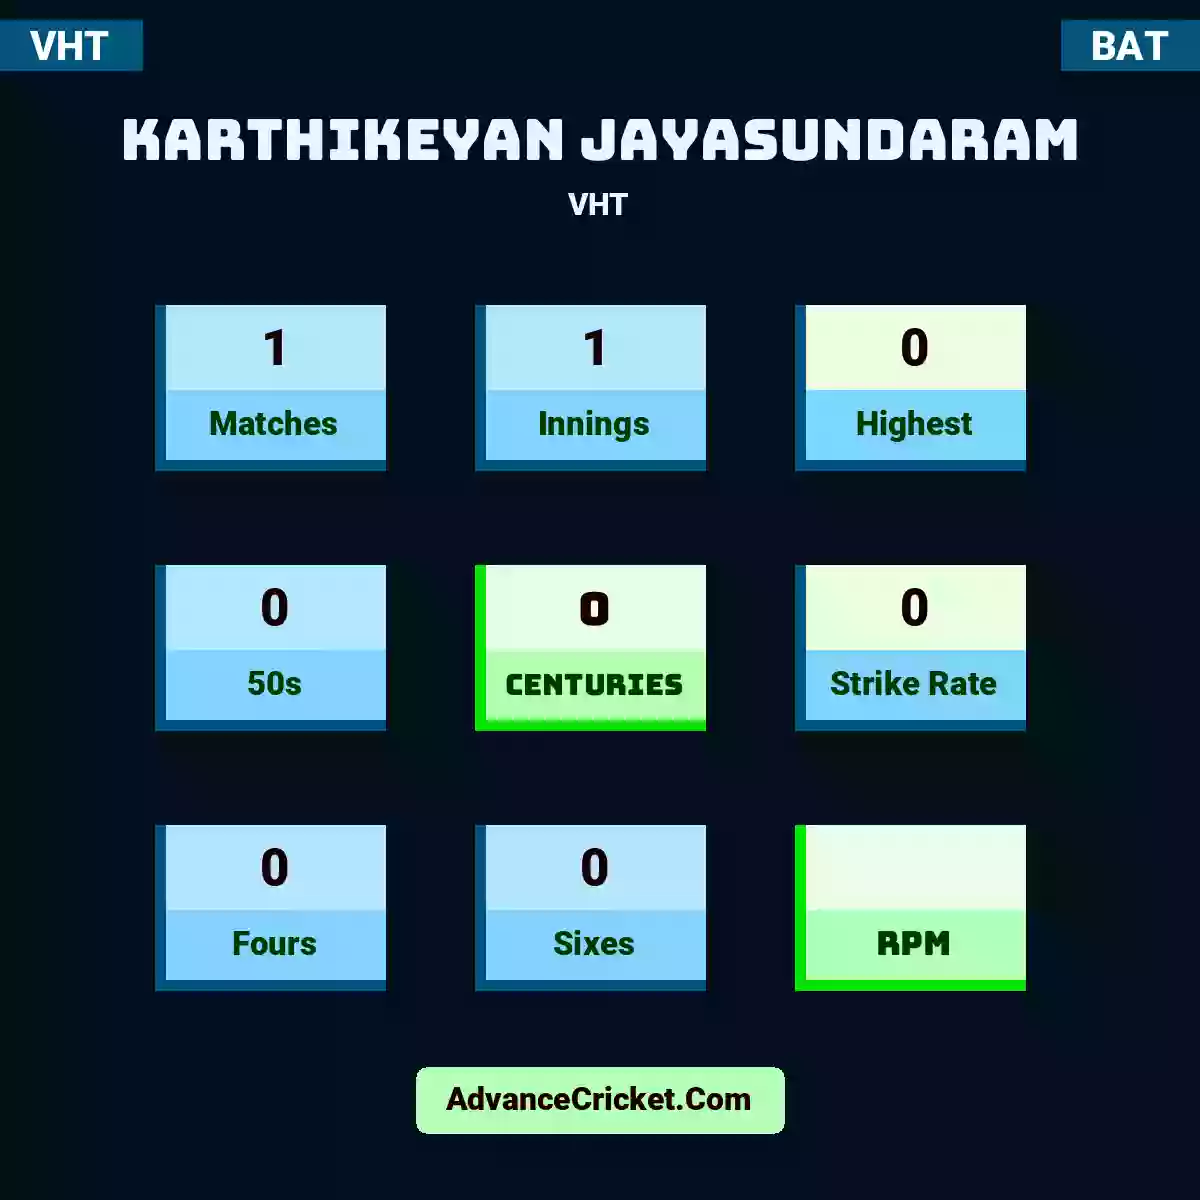 Karthikeyan Jayasundaram VHT , Karthikeyan Jayasundaram played 1 matches, scored 0 runs as highest, 0 half-centuries, and 0 centuries, with a strike rate of 0. K.Jayasundaram hit 0 fours and 0 sixes.